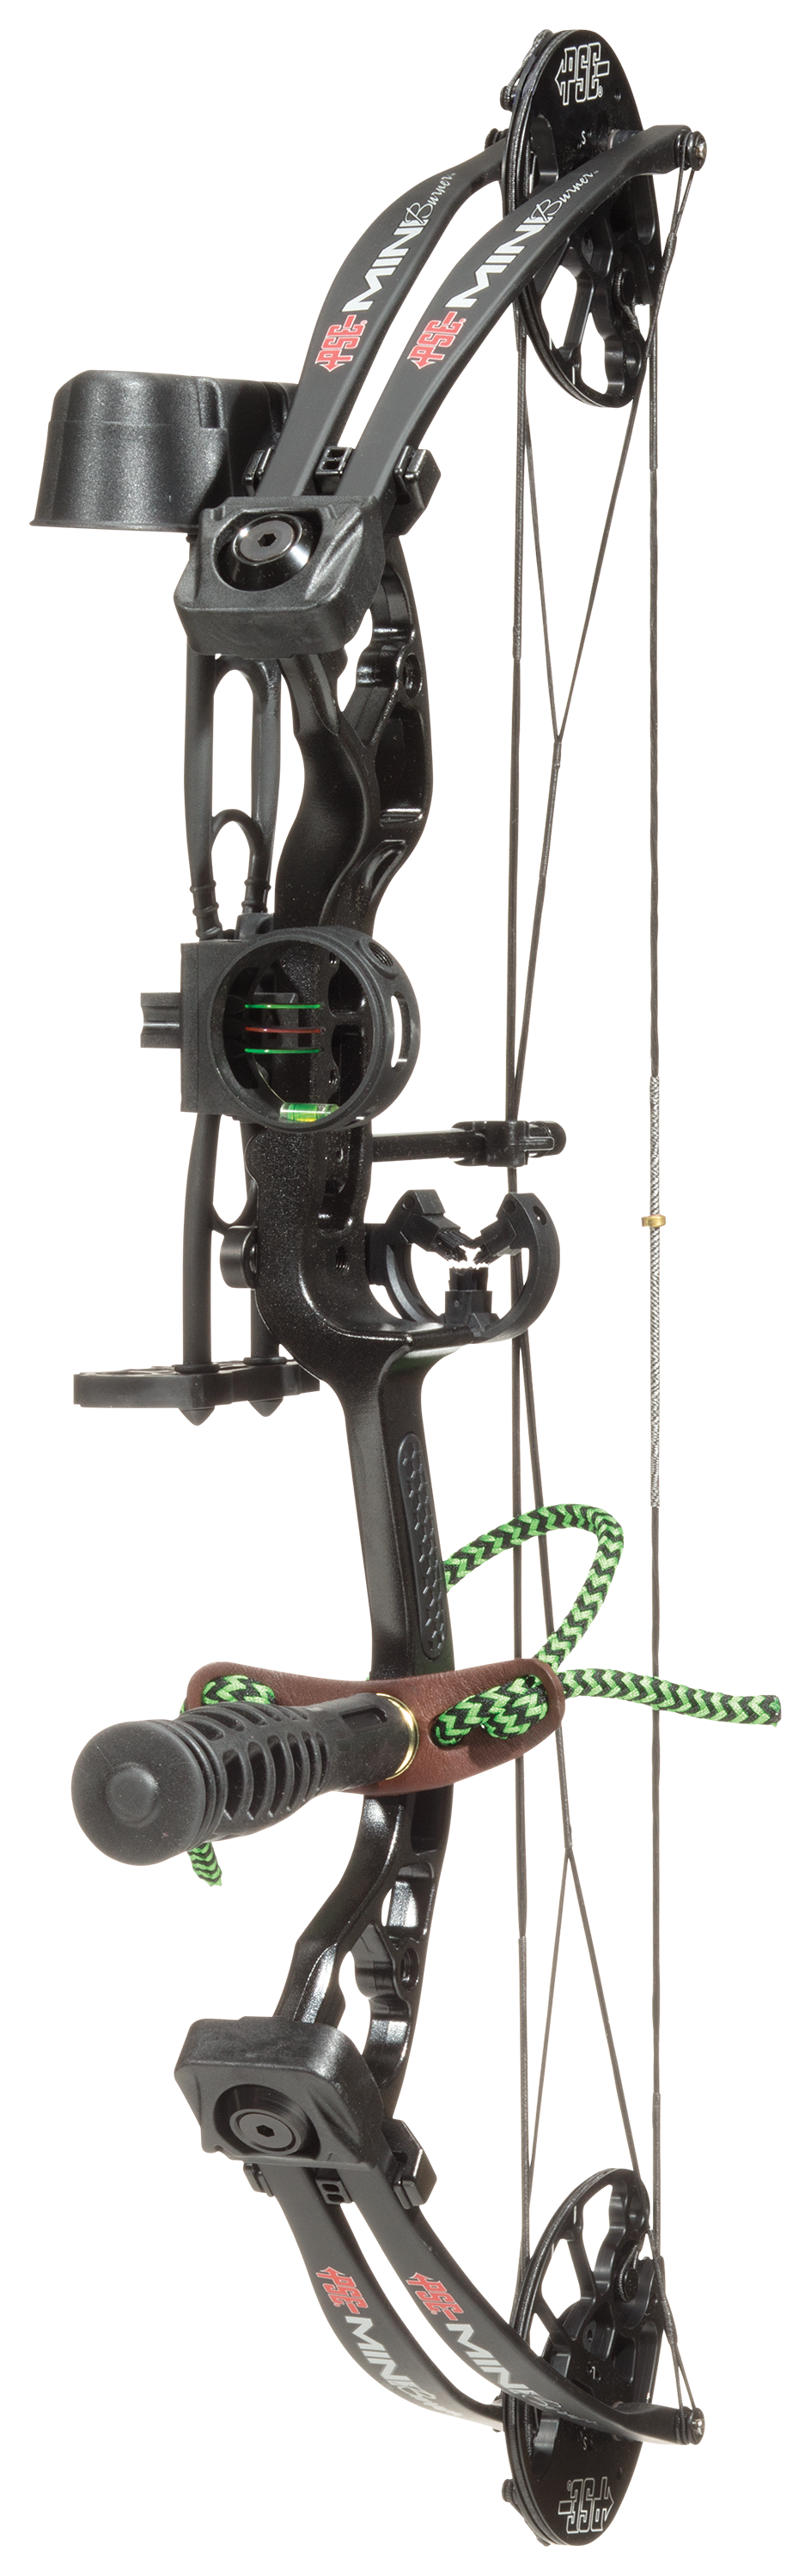 PSE Archery Mini Burner RTS Compound Bow Package - Black